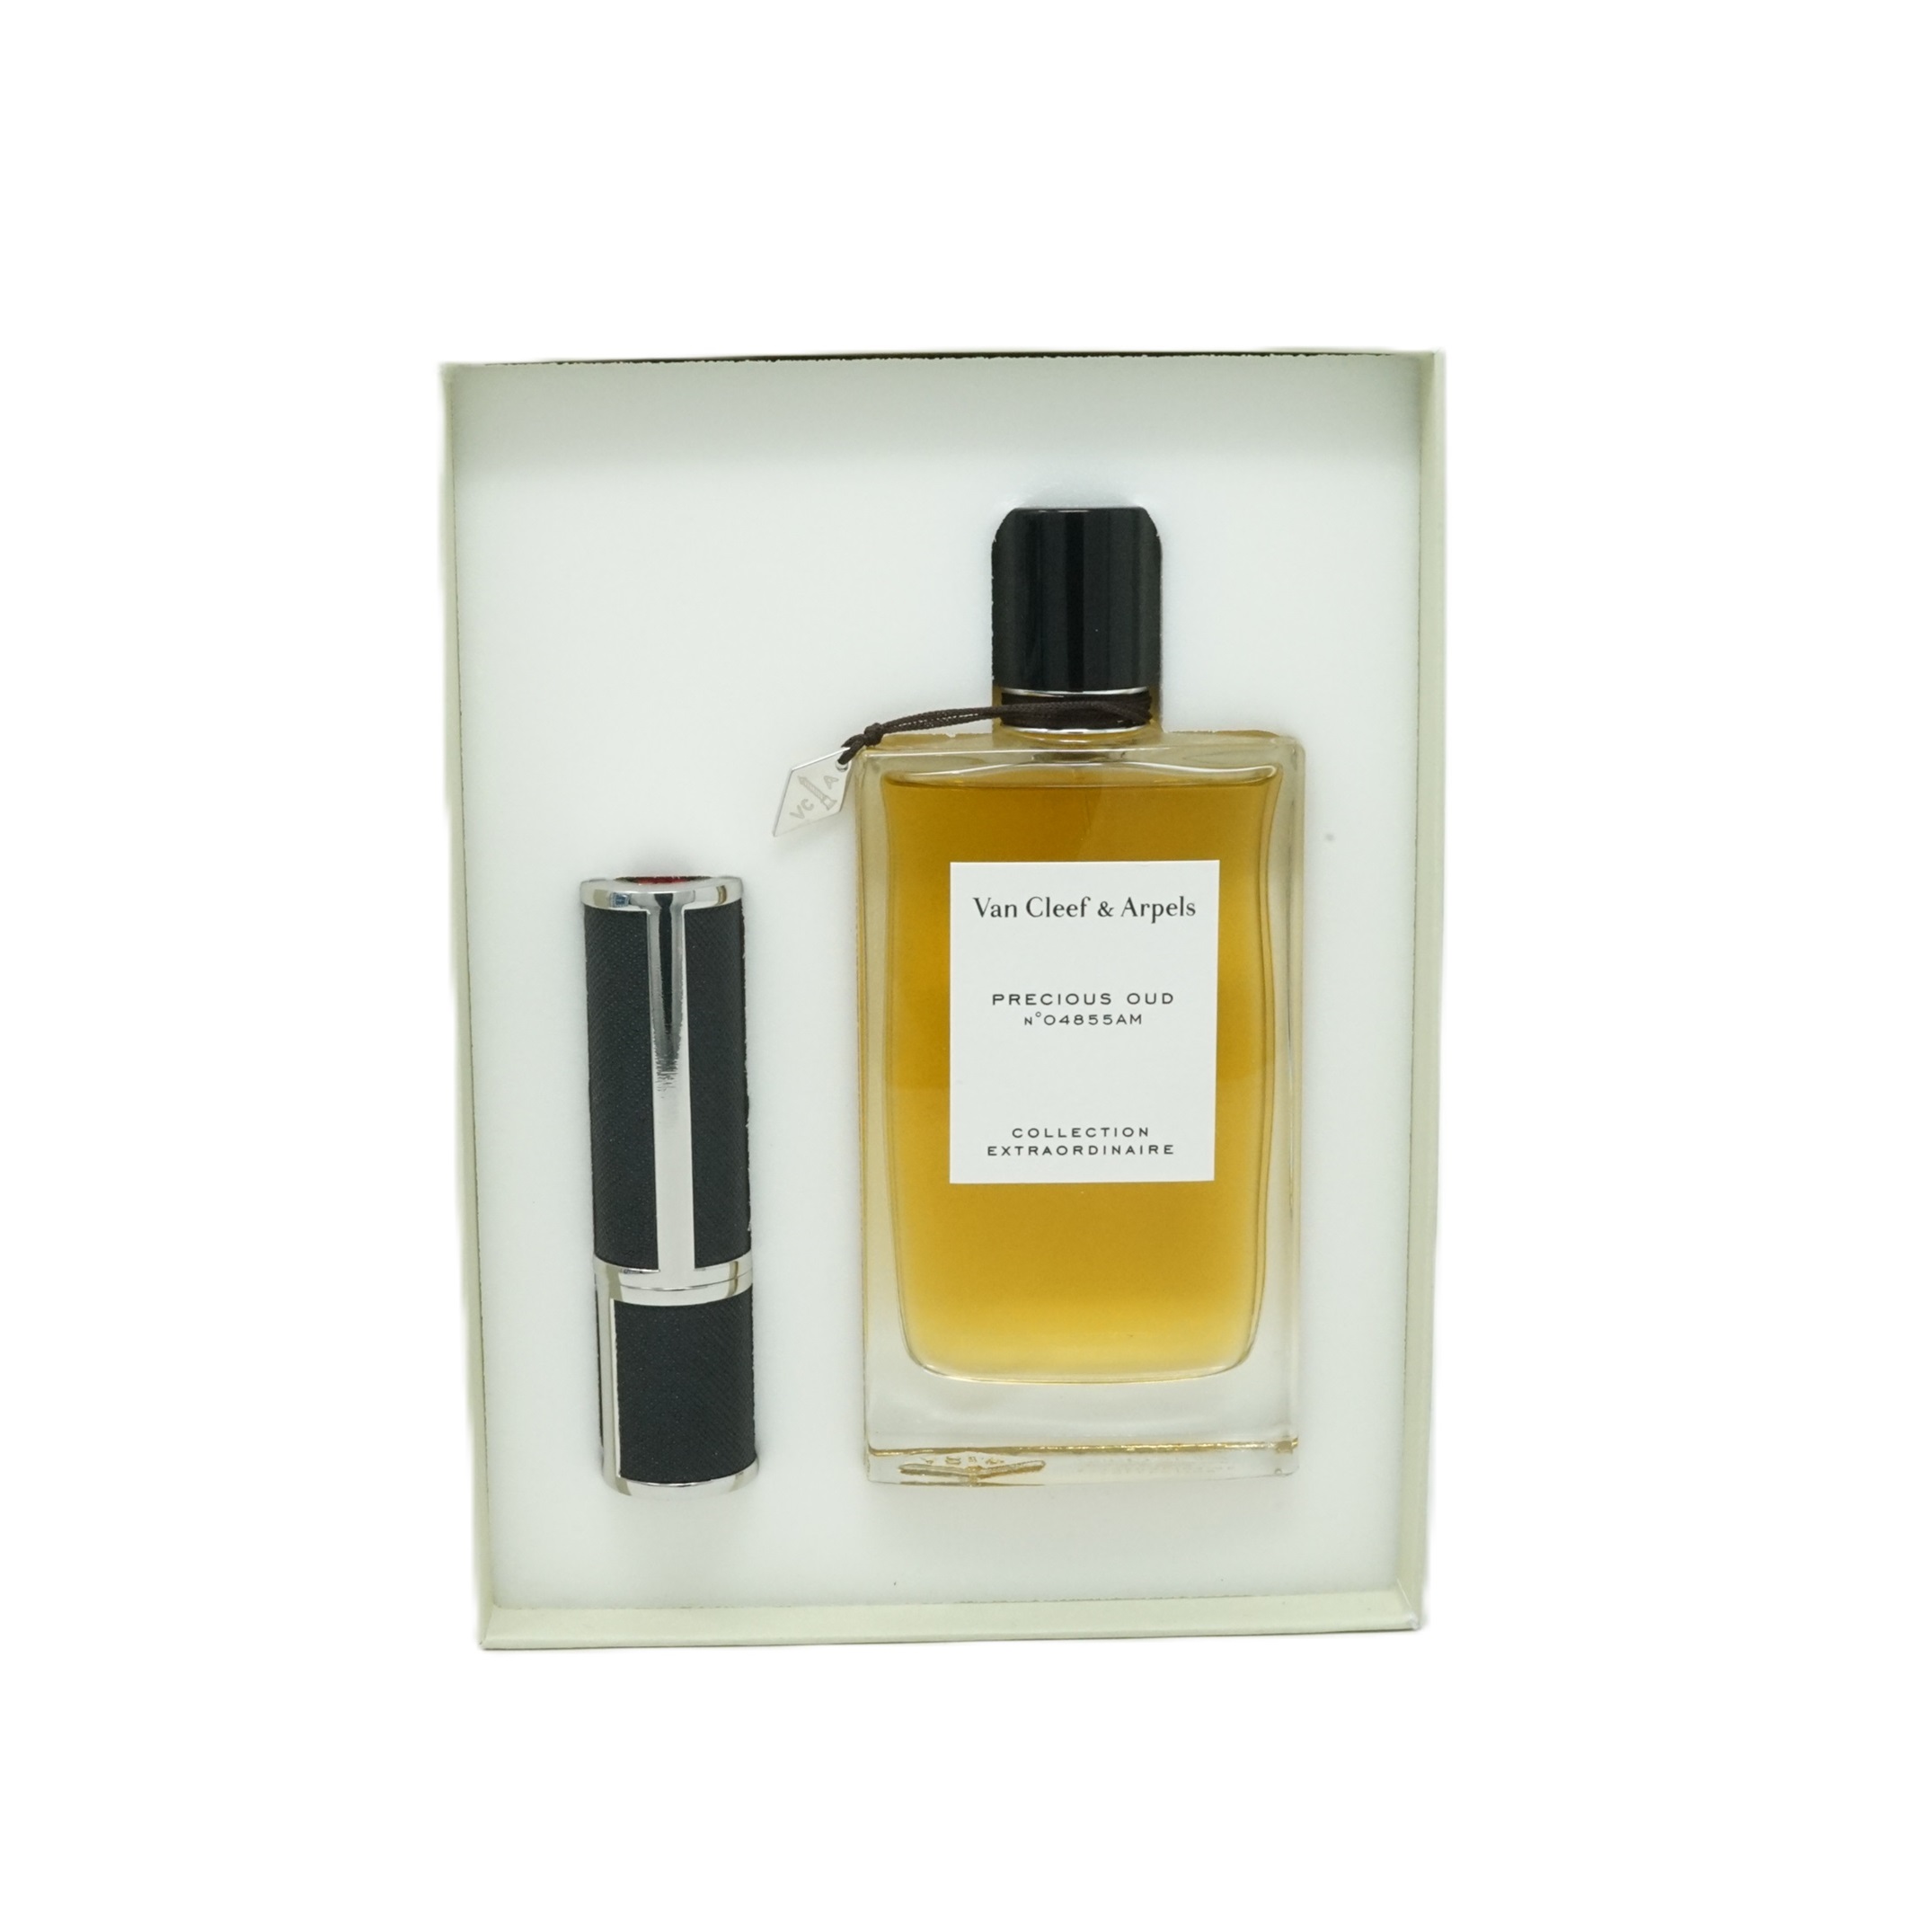 Van Cleef & Arpels Precious Oud Collection Extraordinaire Eau de Parfum Spray 75 ml + Refillable Travel Spray 5ml